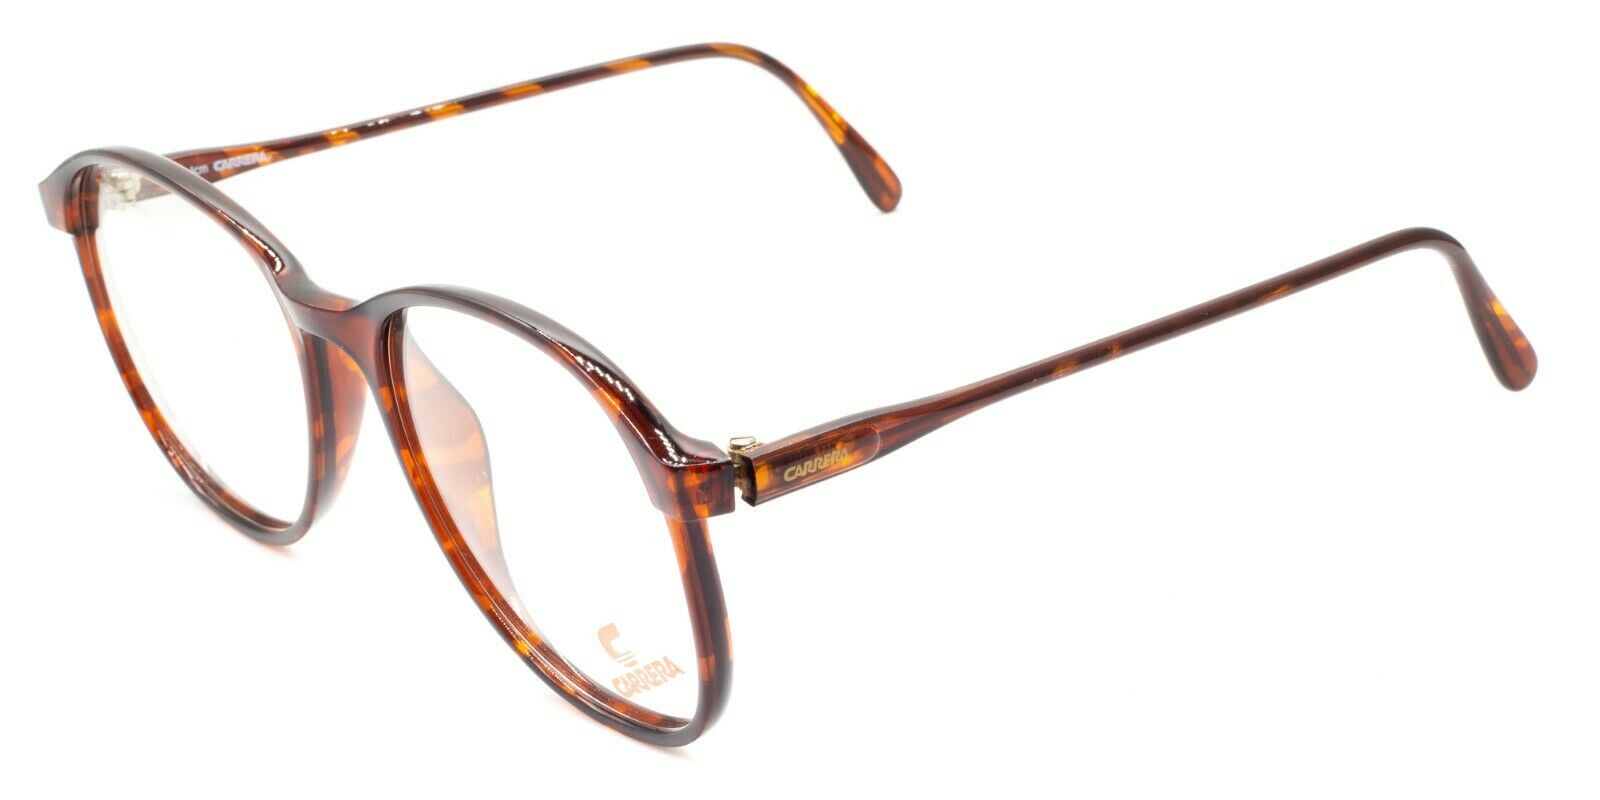 CARRERA 5358 12 57mm Vintage Eyewear FRAMES Glasses RX Optical Eyeglasses -  New - GGV Eyewear